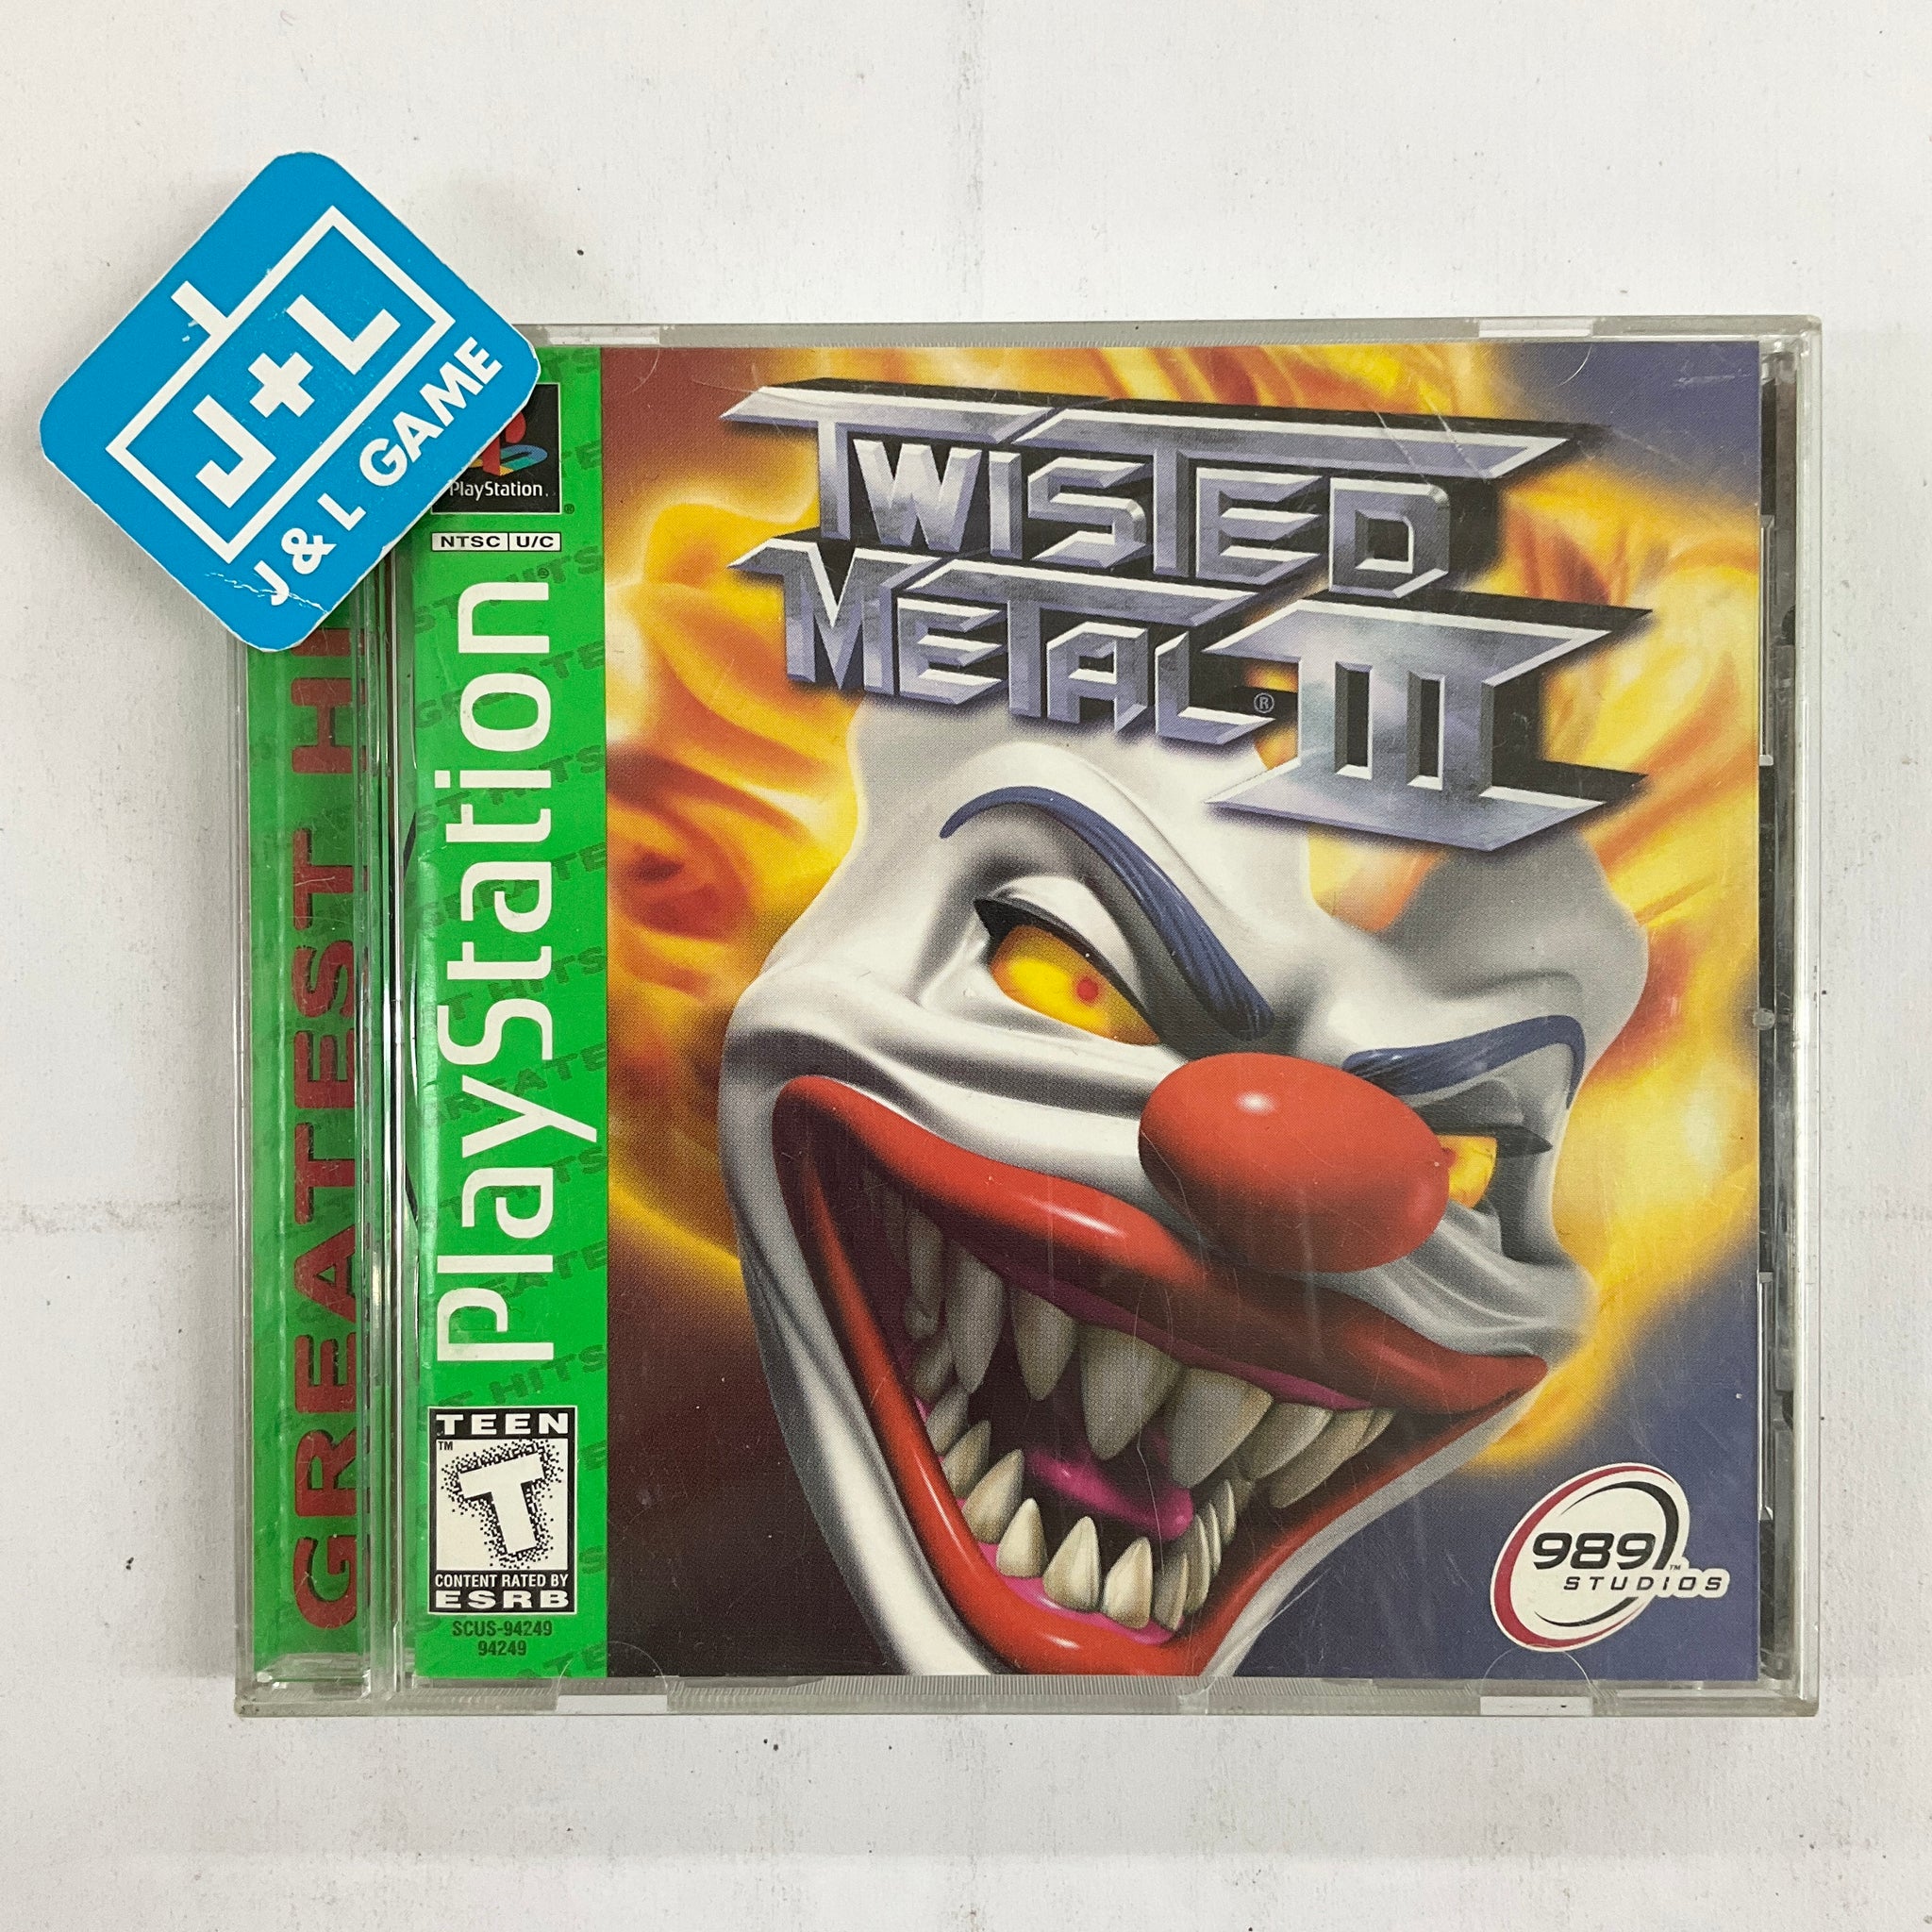 Twisted Metal III Games